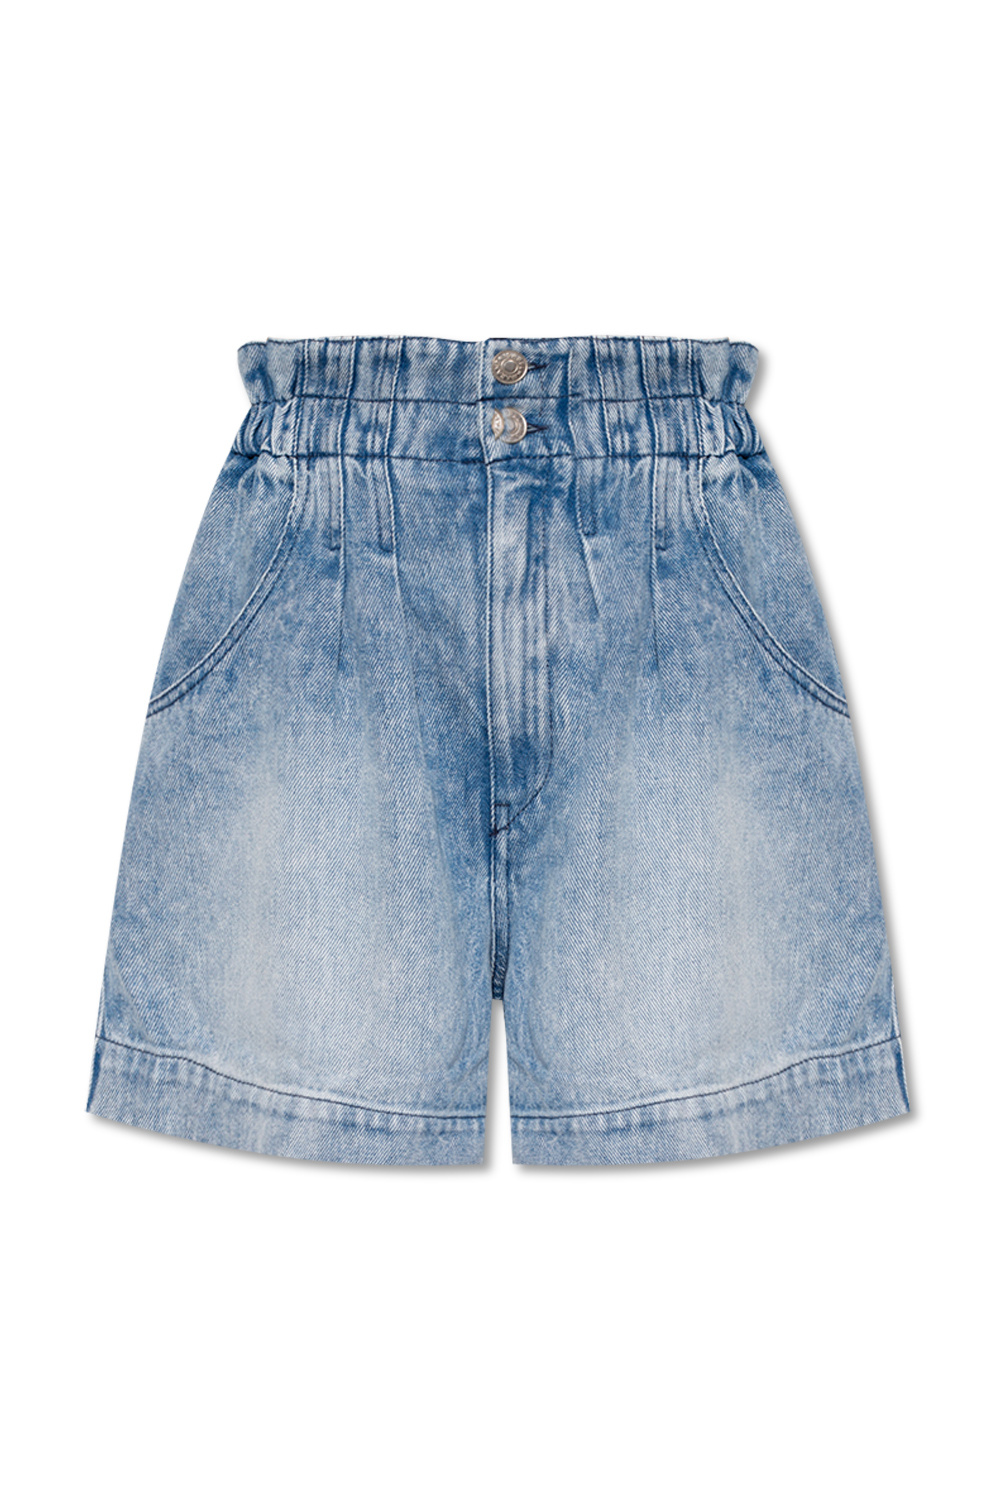 Marant Etoile ‘Teresa’ denim shorts